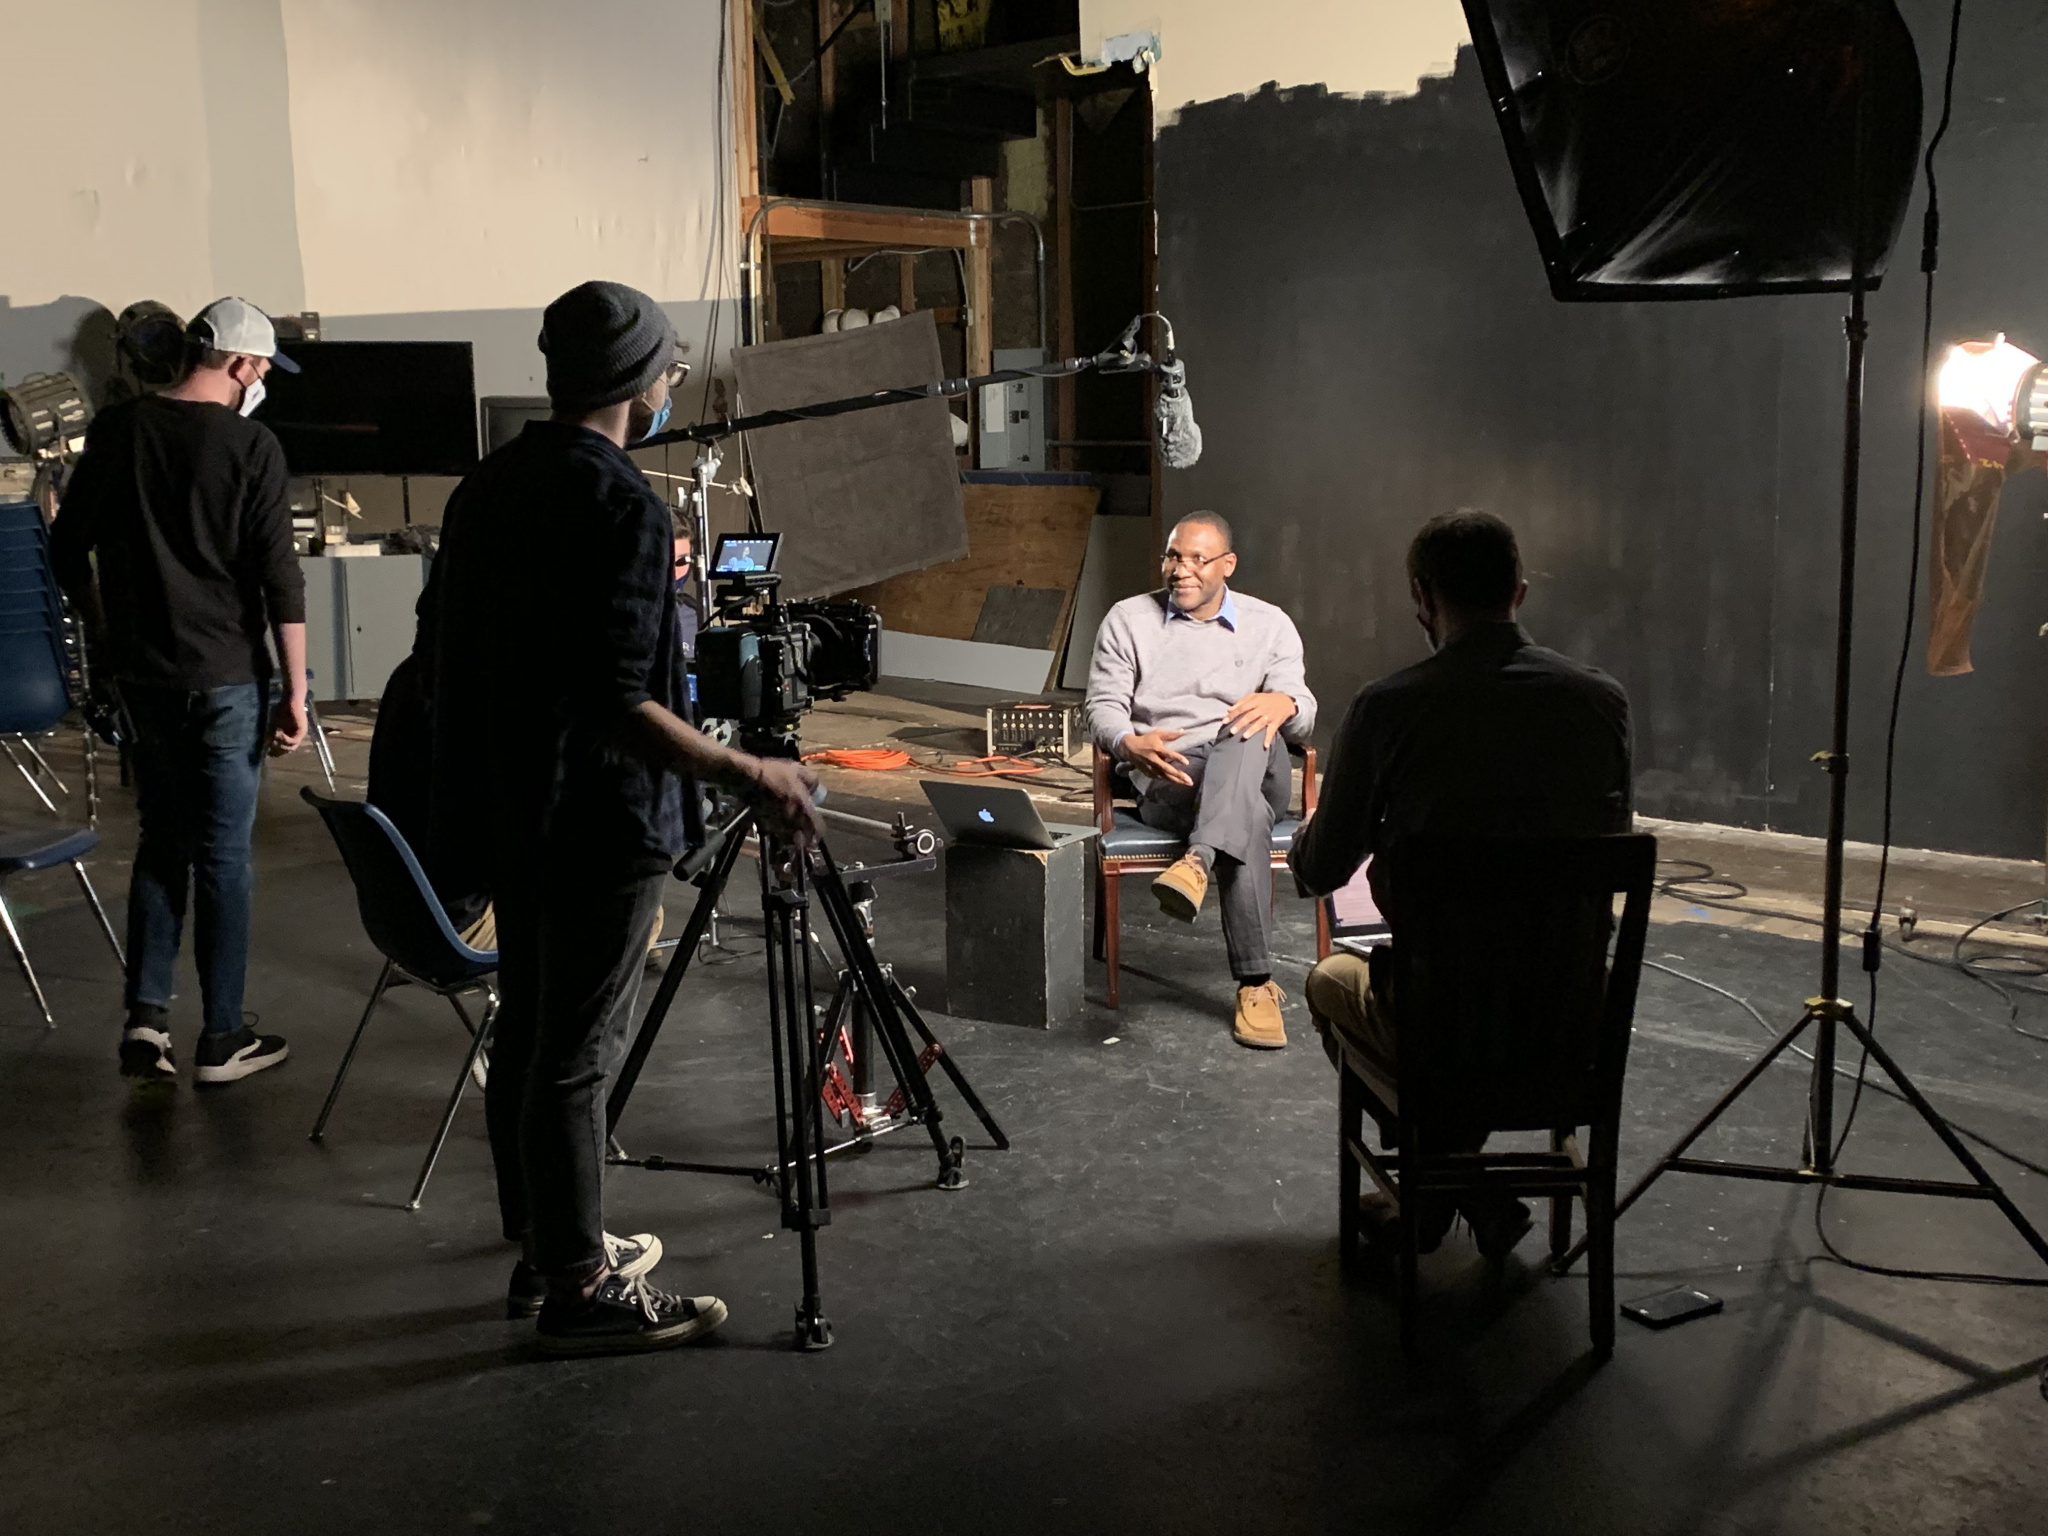 The Basilean film crew interviews Dr. Bernard Kadio